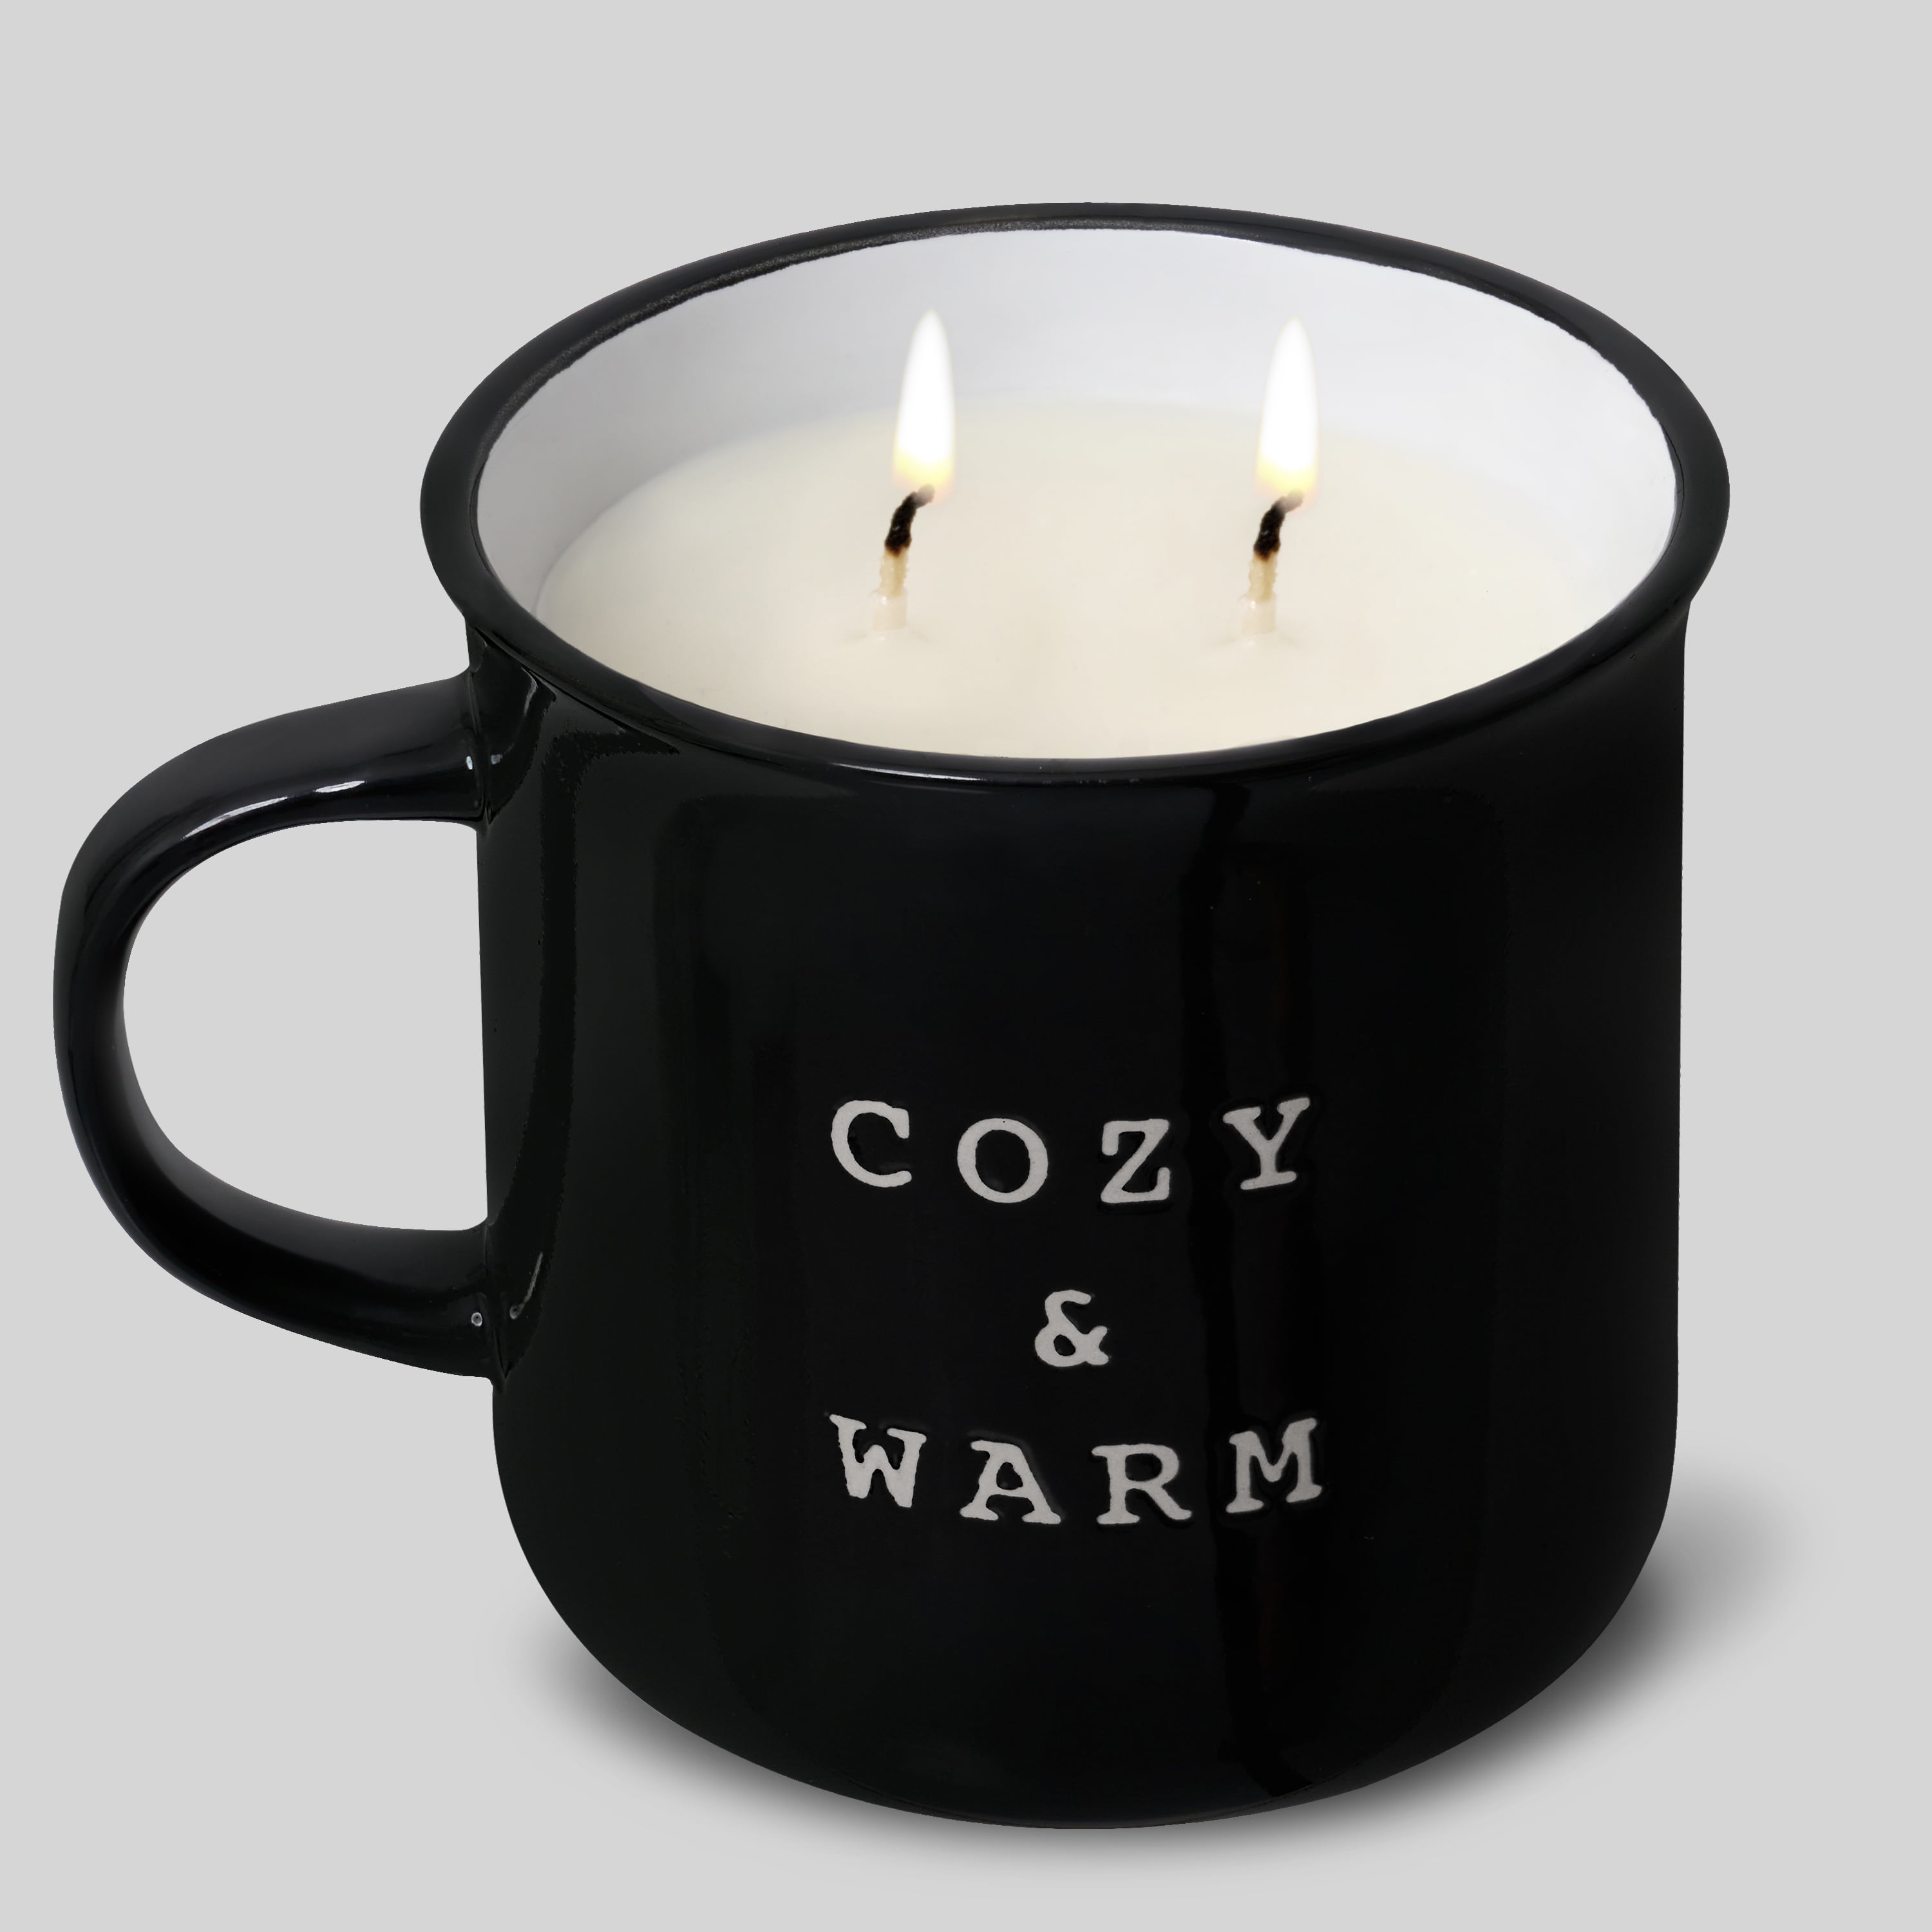 Custom Mug Soy Candle, Cup of Cozy